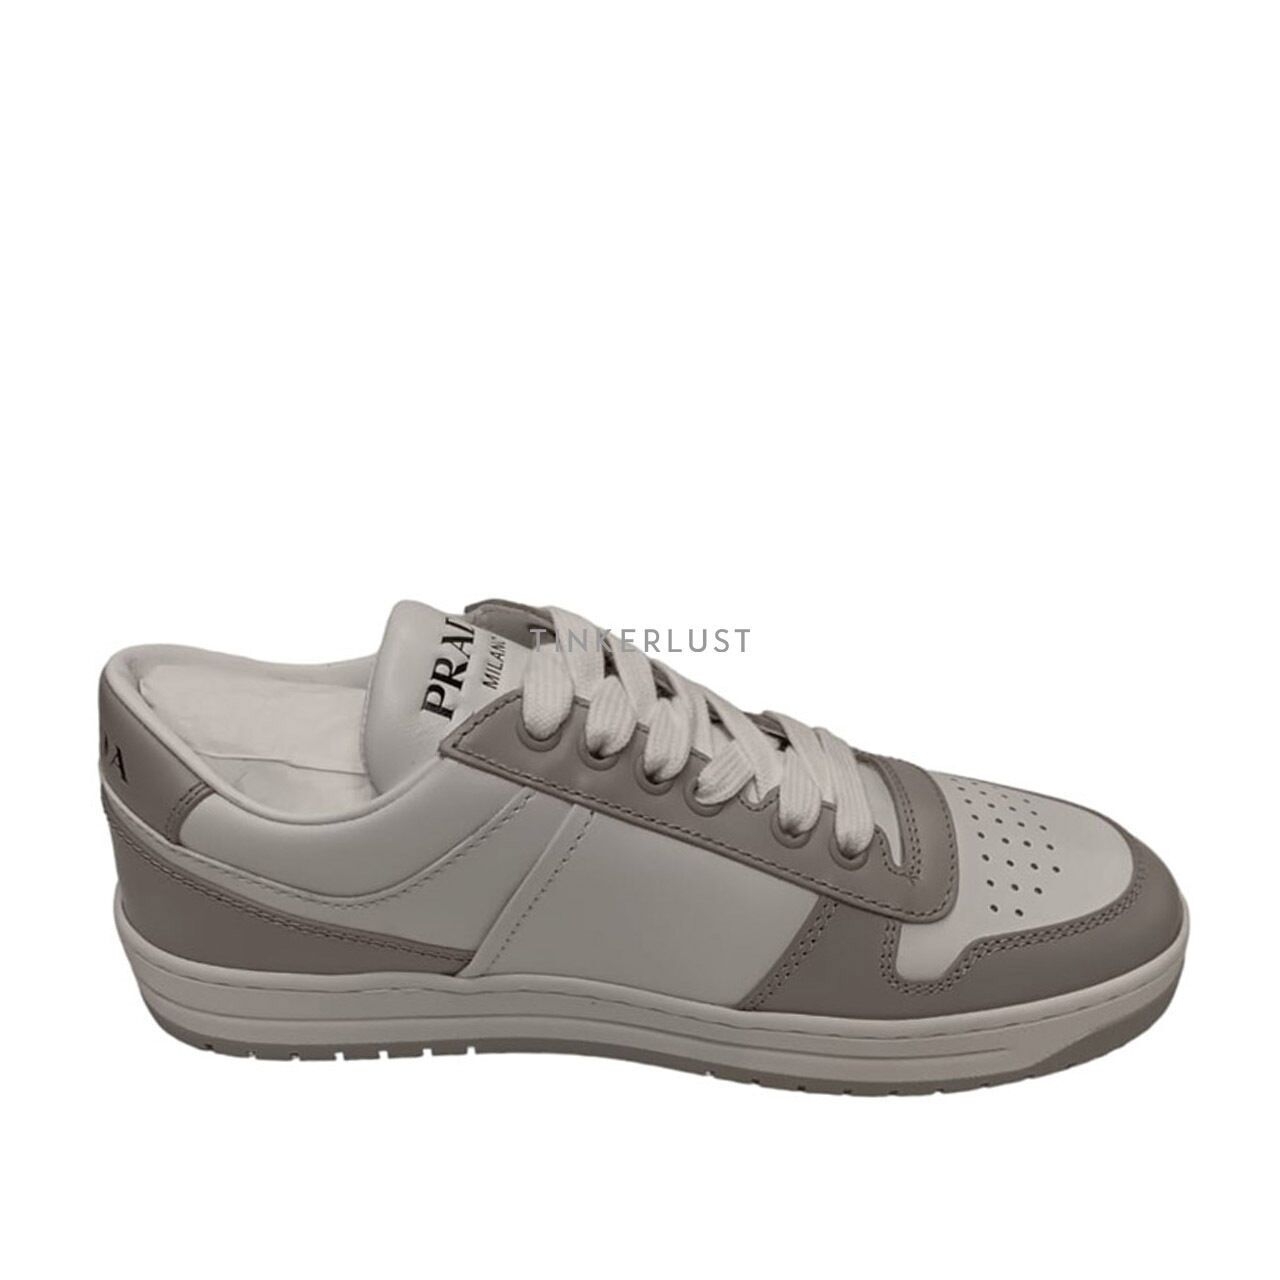 Prada Downtown Perforated White & Grey Sneakers 